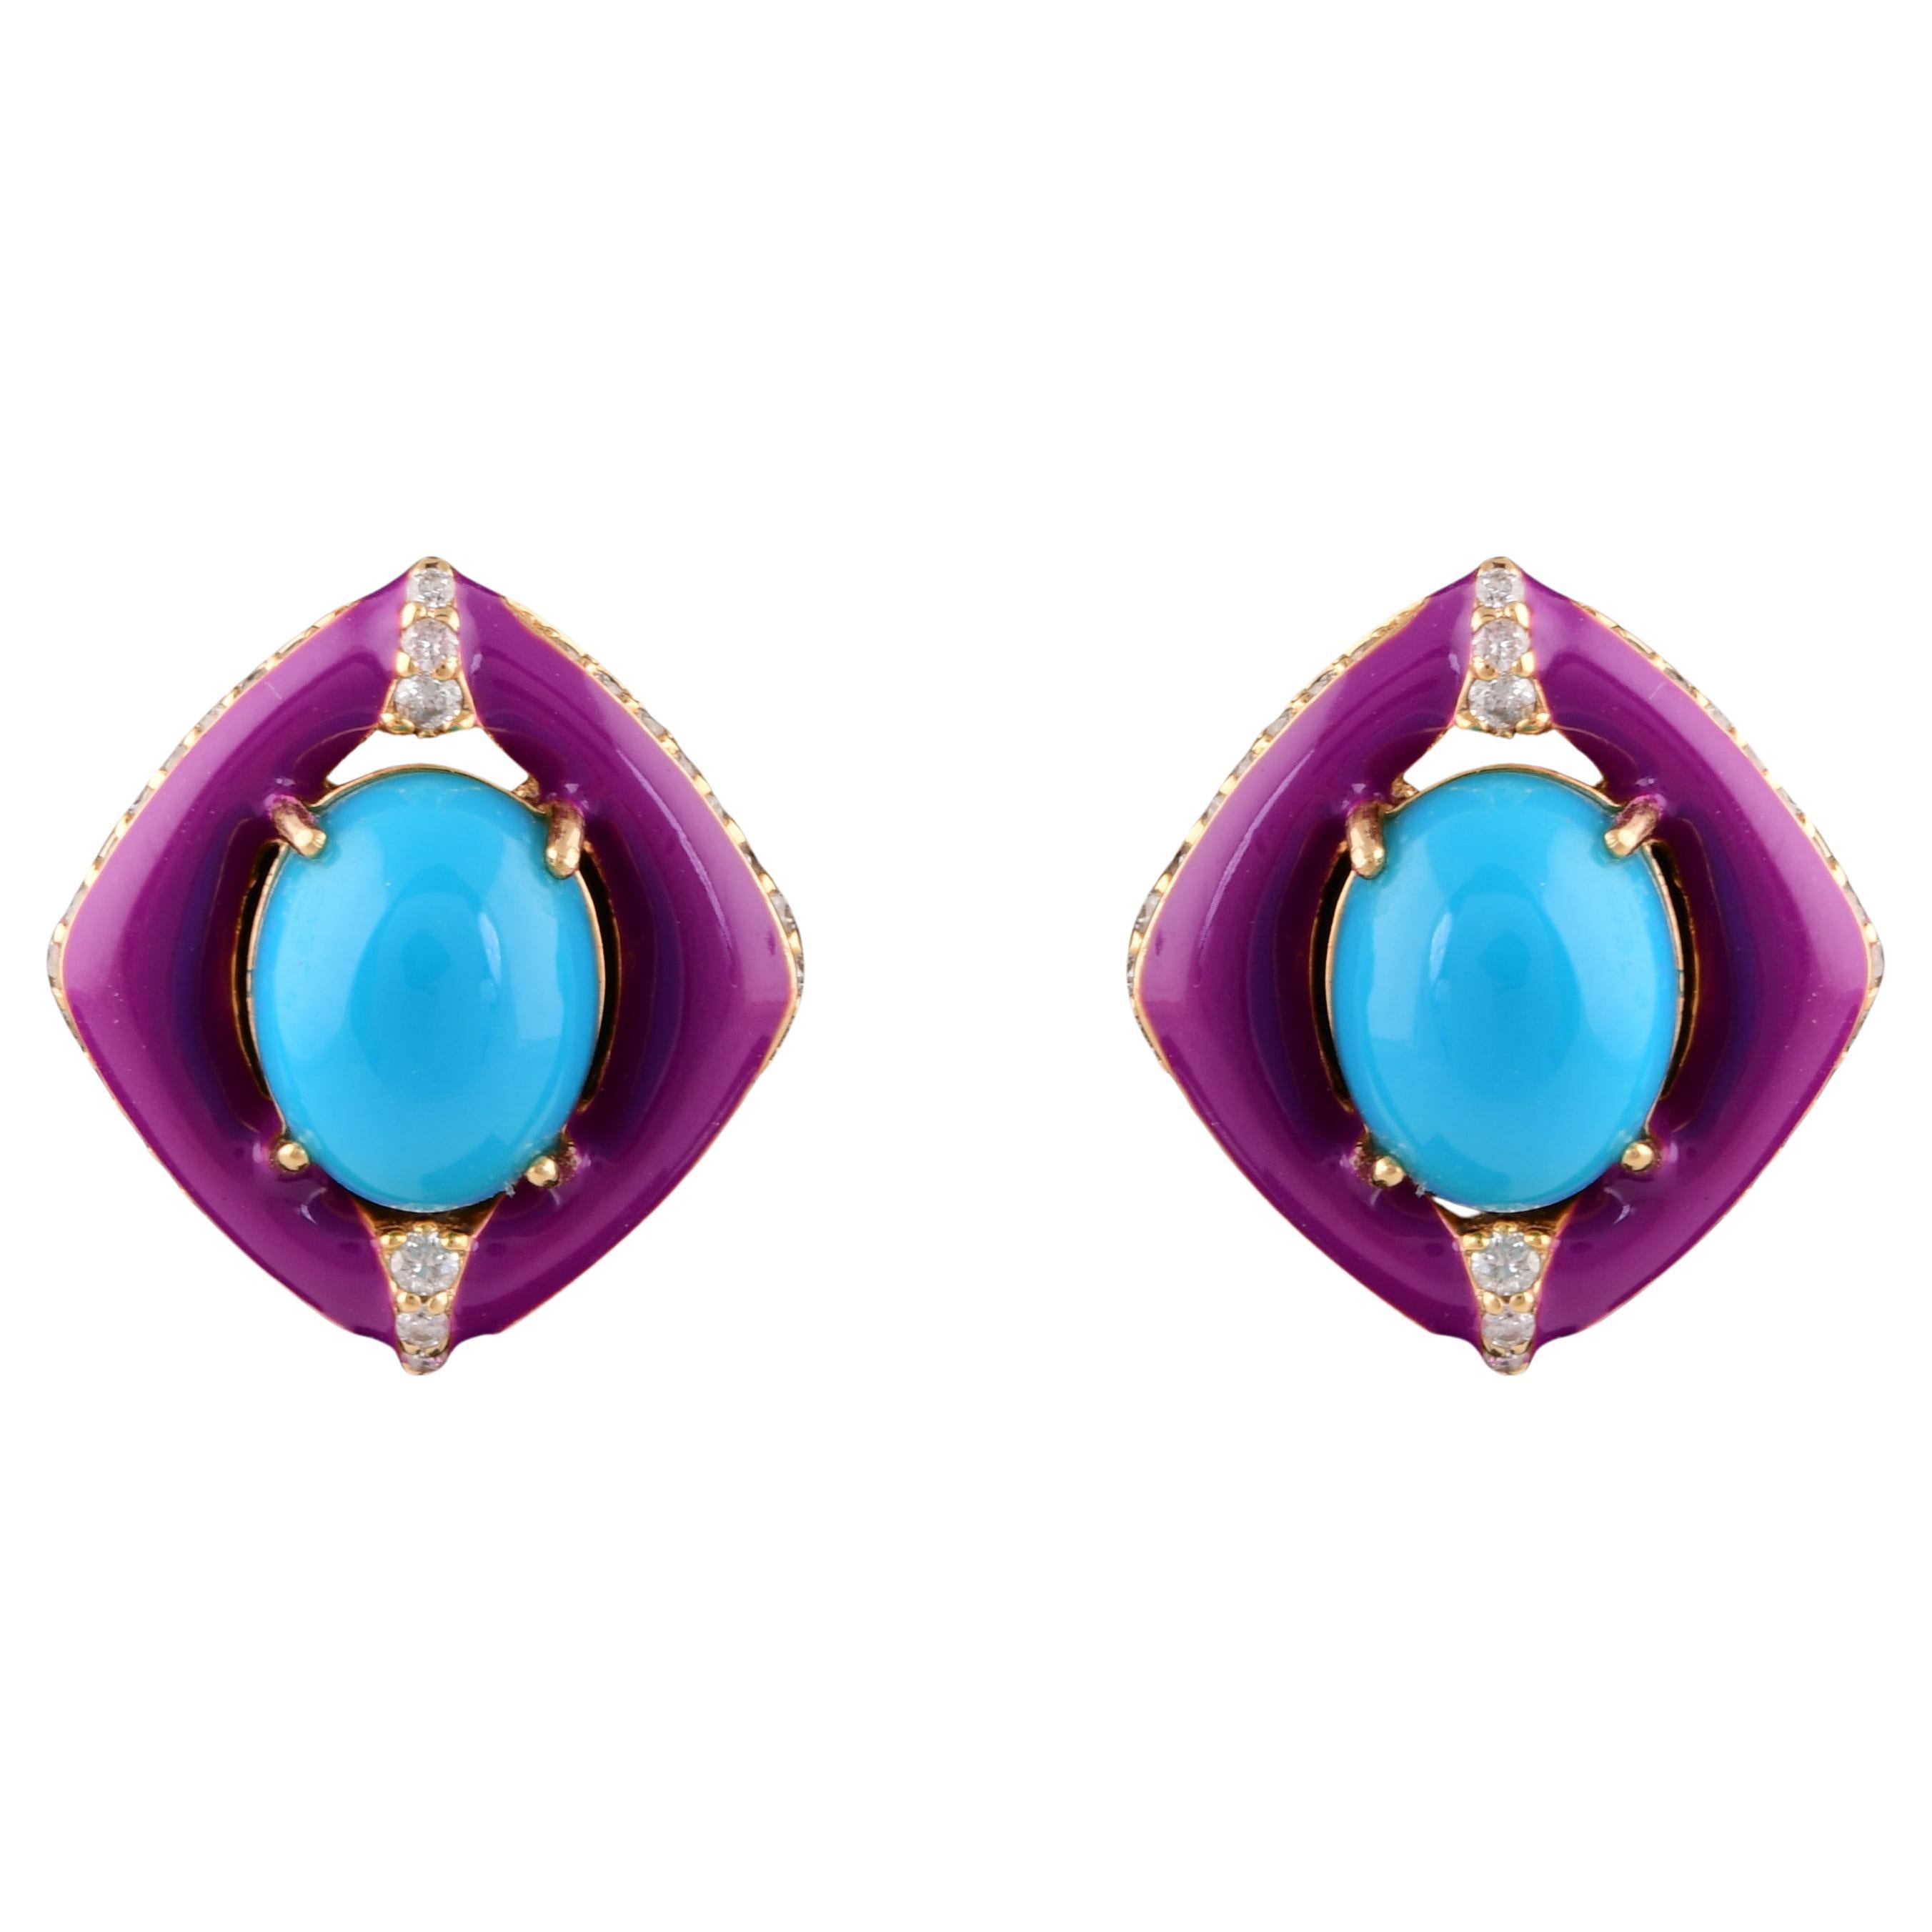 Oval Turquoise Gemstone Stud Earrings Diamond 18 Karat Yellow Gold Fine Jewelry